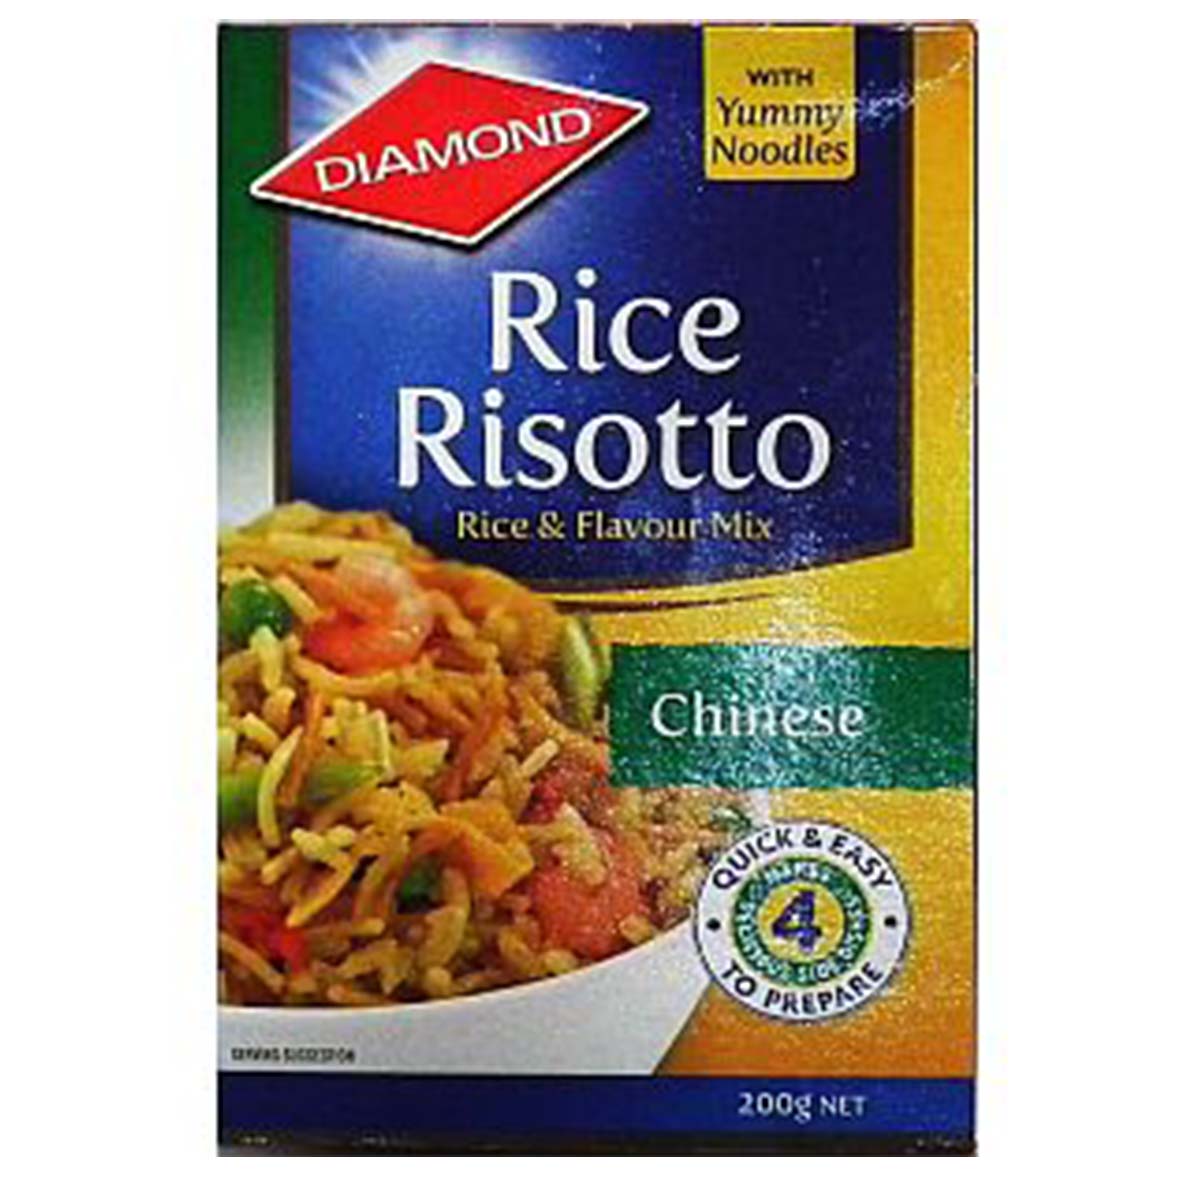 Diamond Rice Risotto Chinese 200g